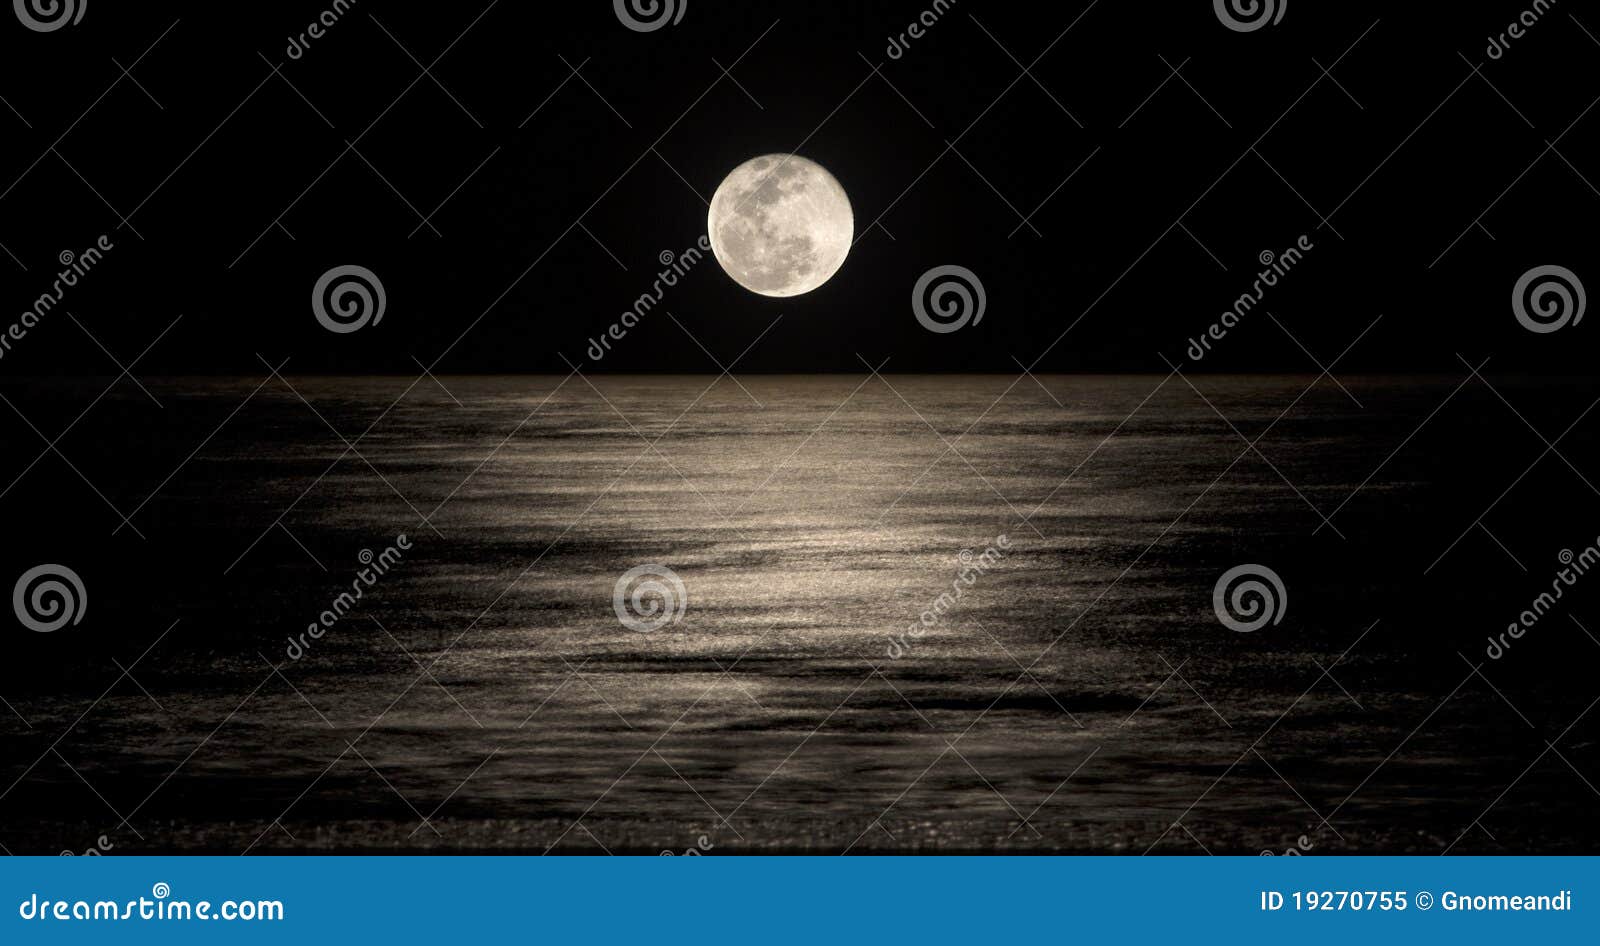 https://thumbs.dreamstime.com/z/moon-ray-19270755.jpg